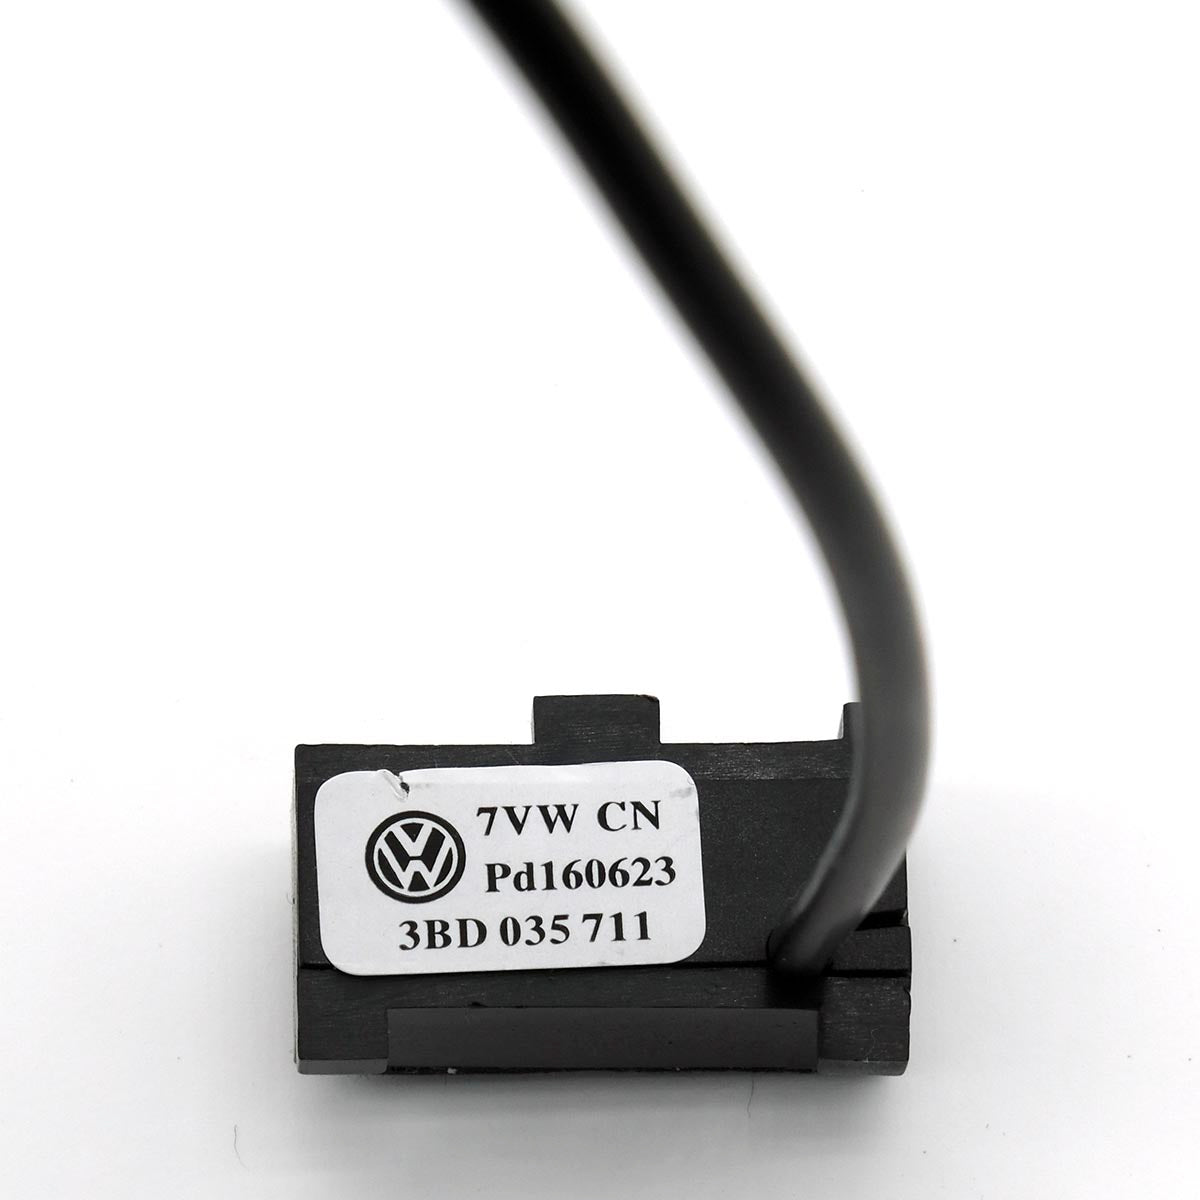 Cable set for retrofitting VW FSE Bluetooth Premium RCD510 RNS 510 RNS315 RNS310 hands-free system